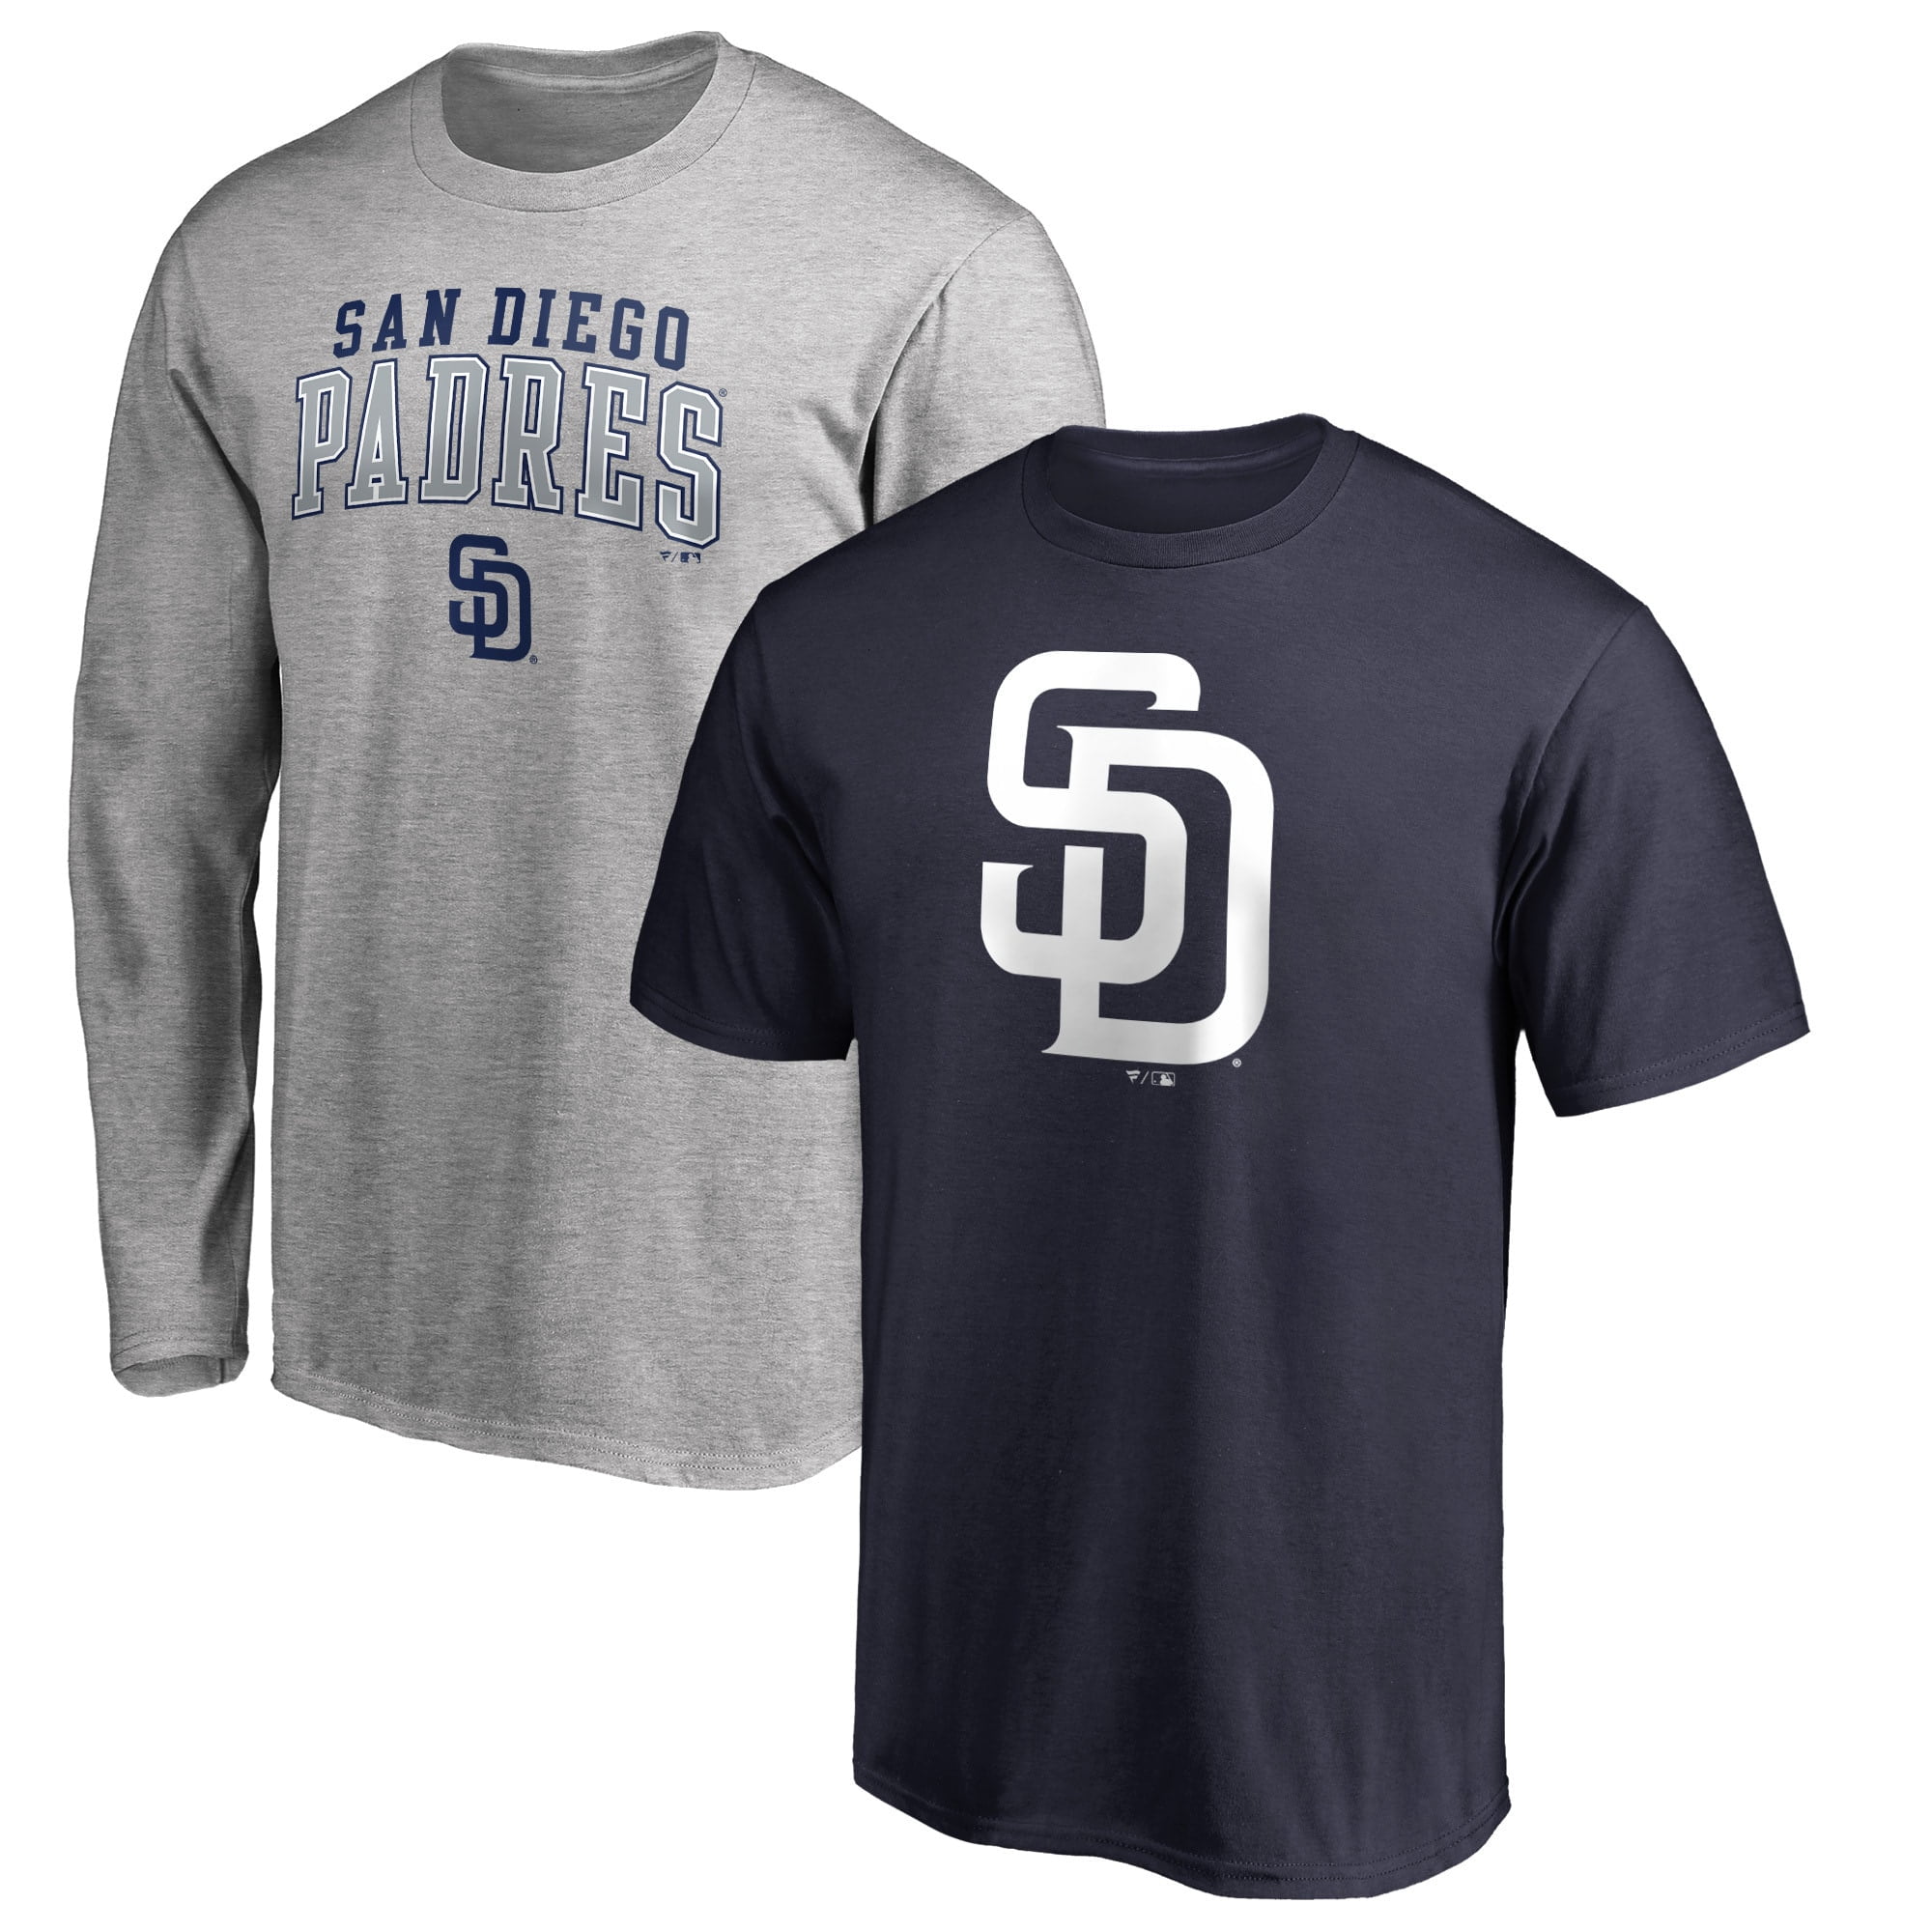 San Diego Padres Fanatics Branded Team Logo T-Shirt Combo Set - Navy ...